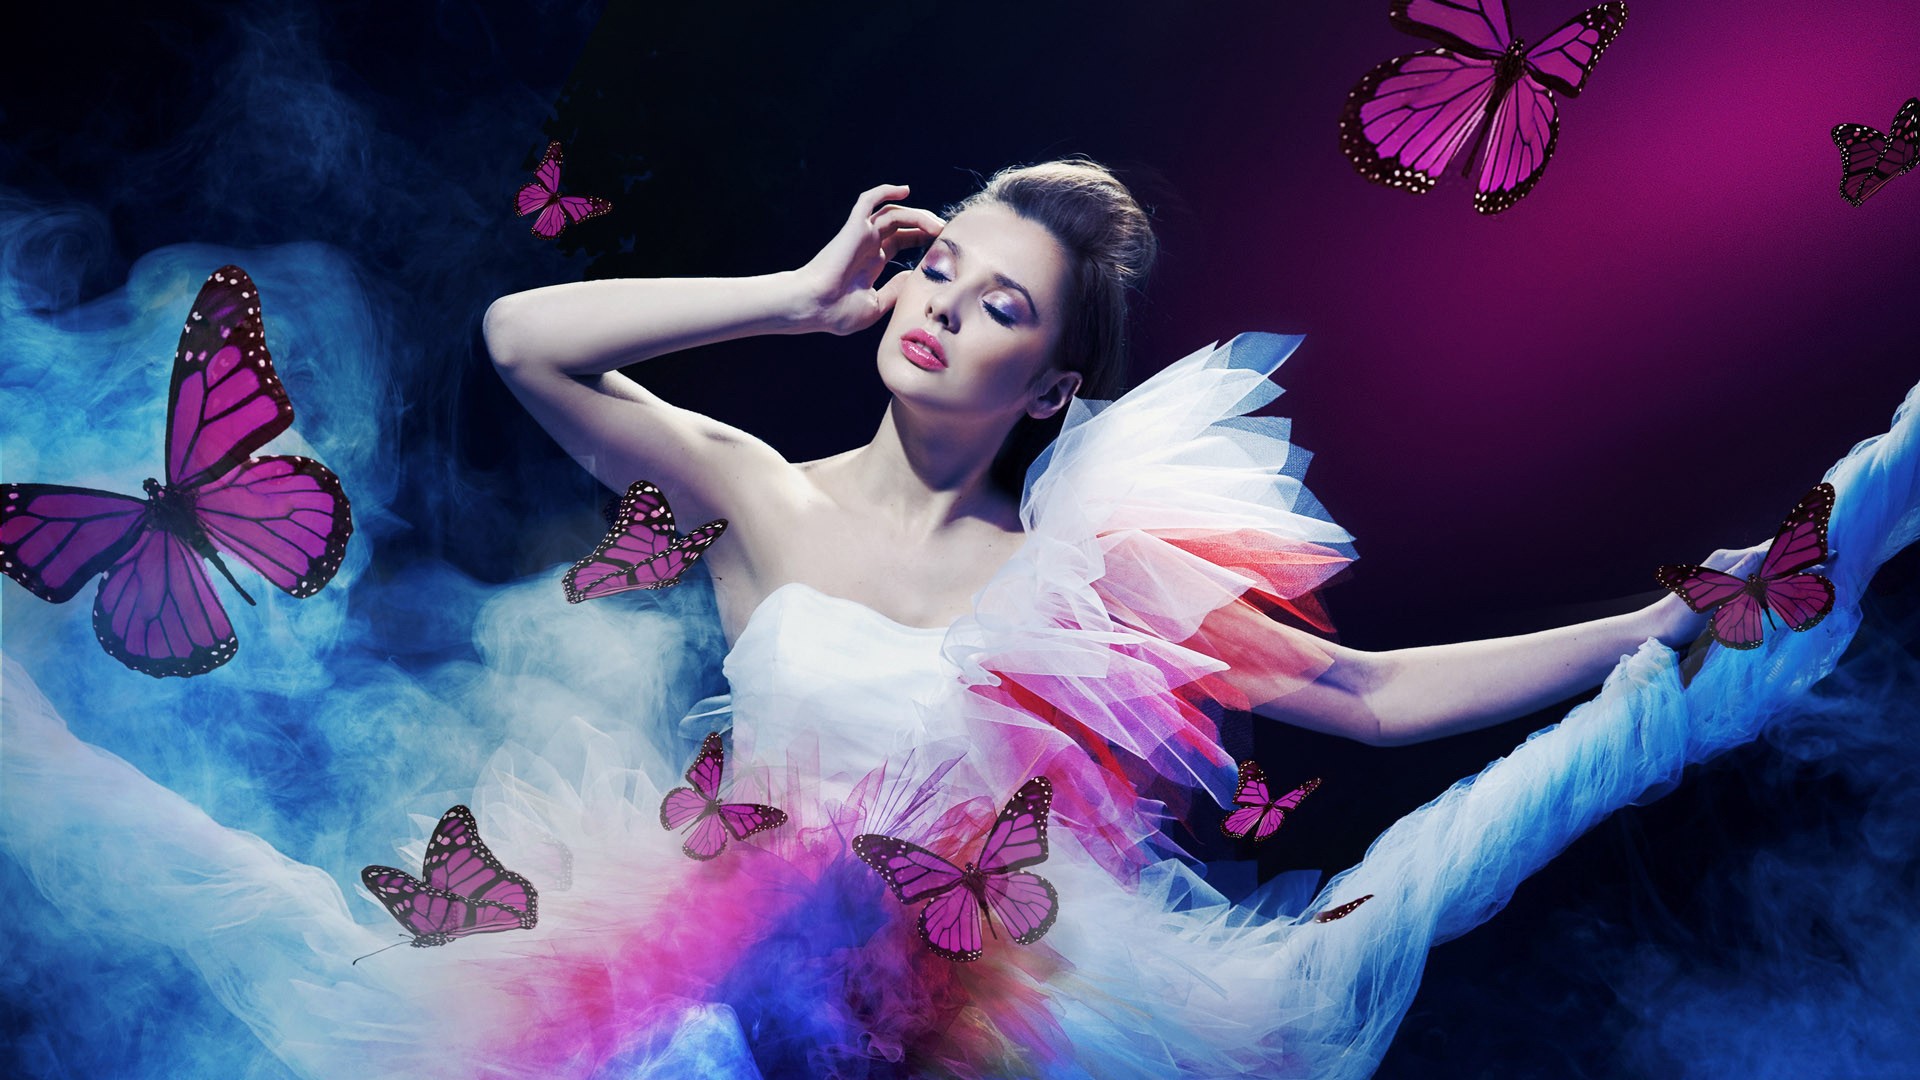 butterfly girl wallpaper,purple,butterfly,pink,cg artwork,dancer